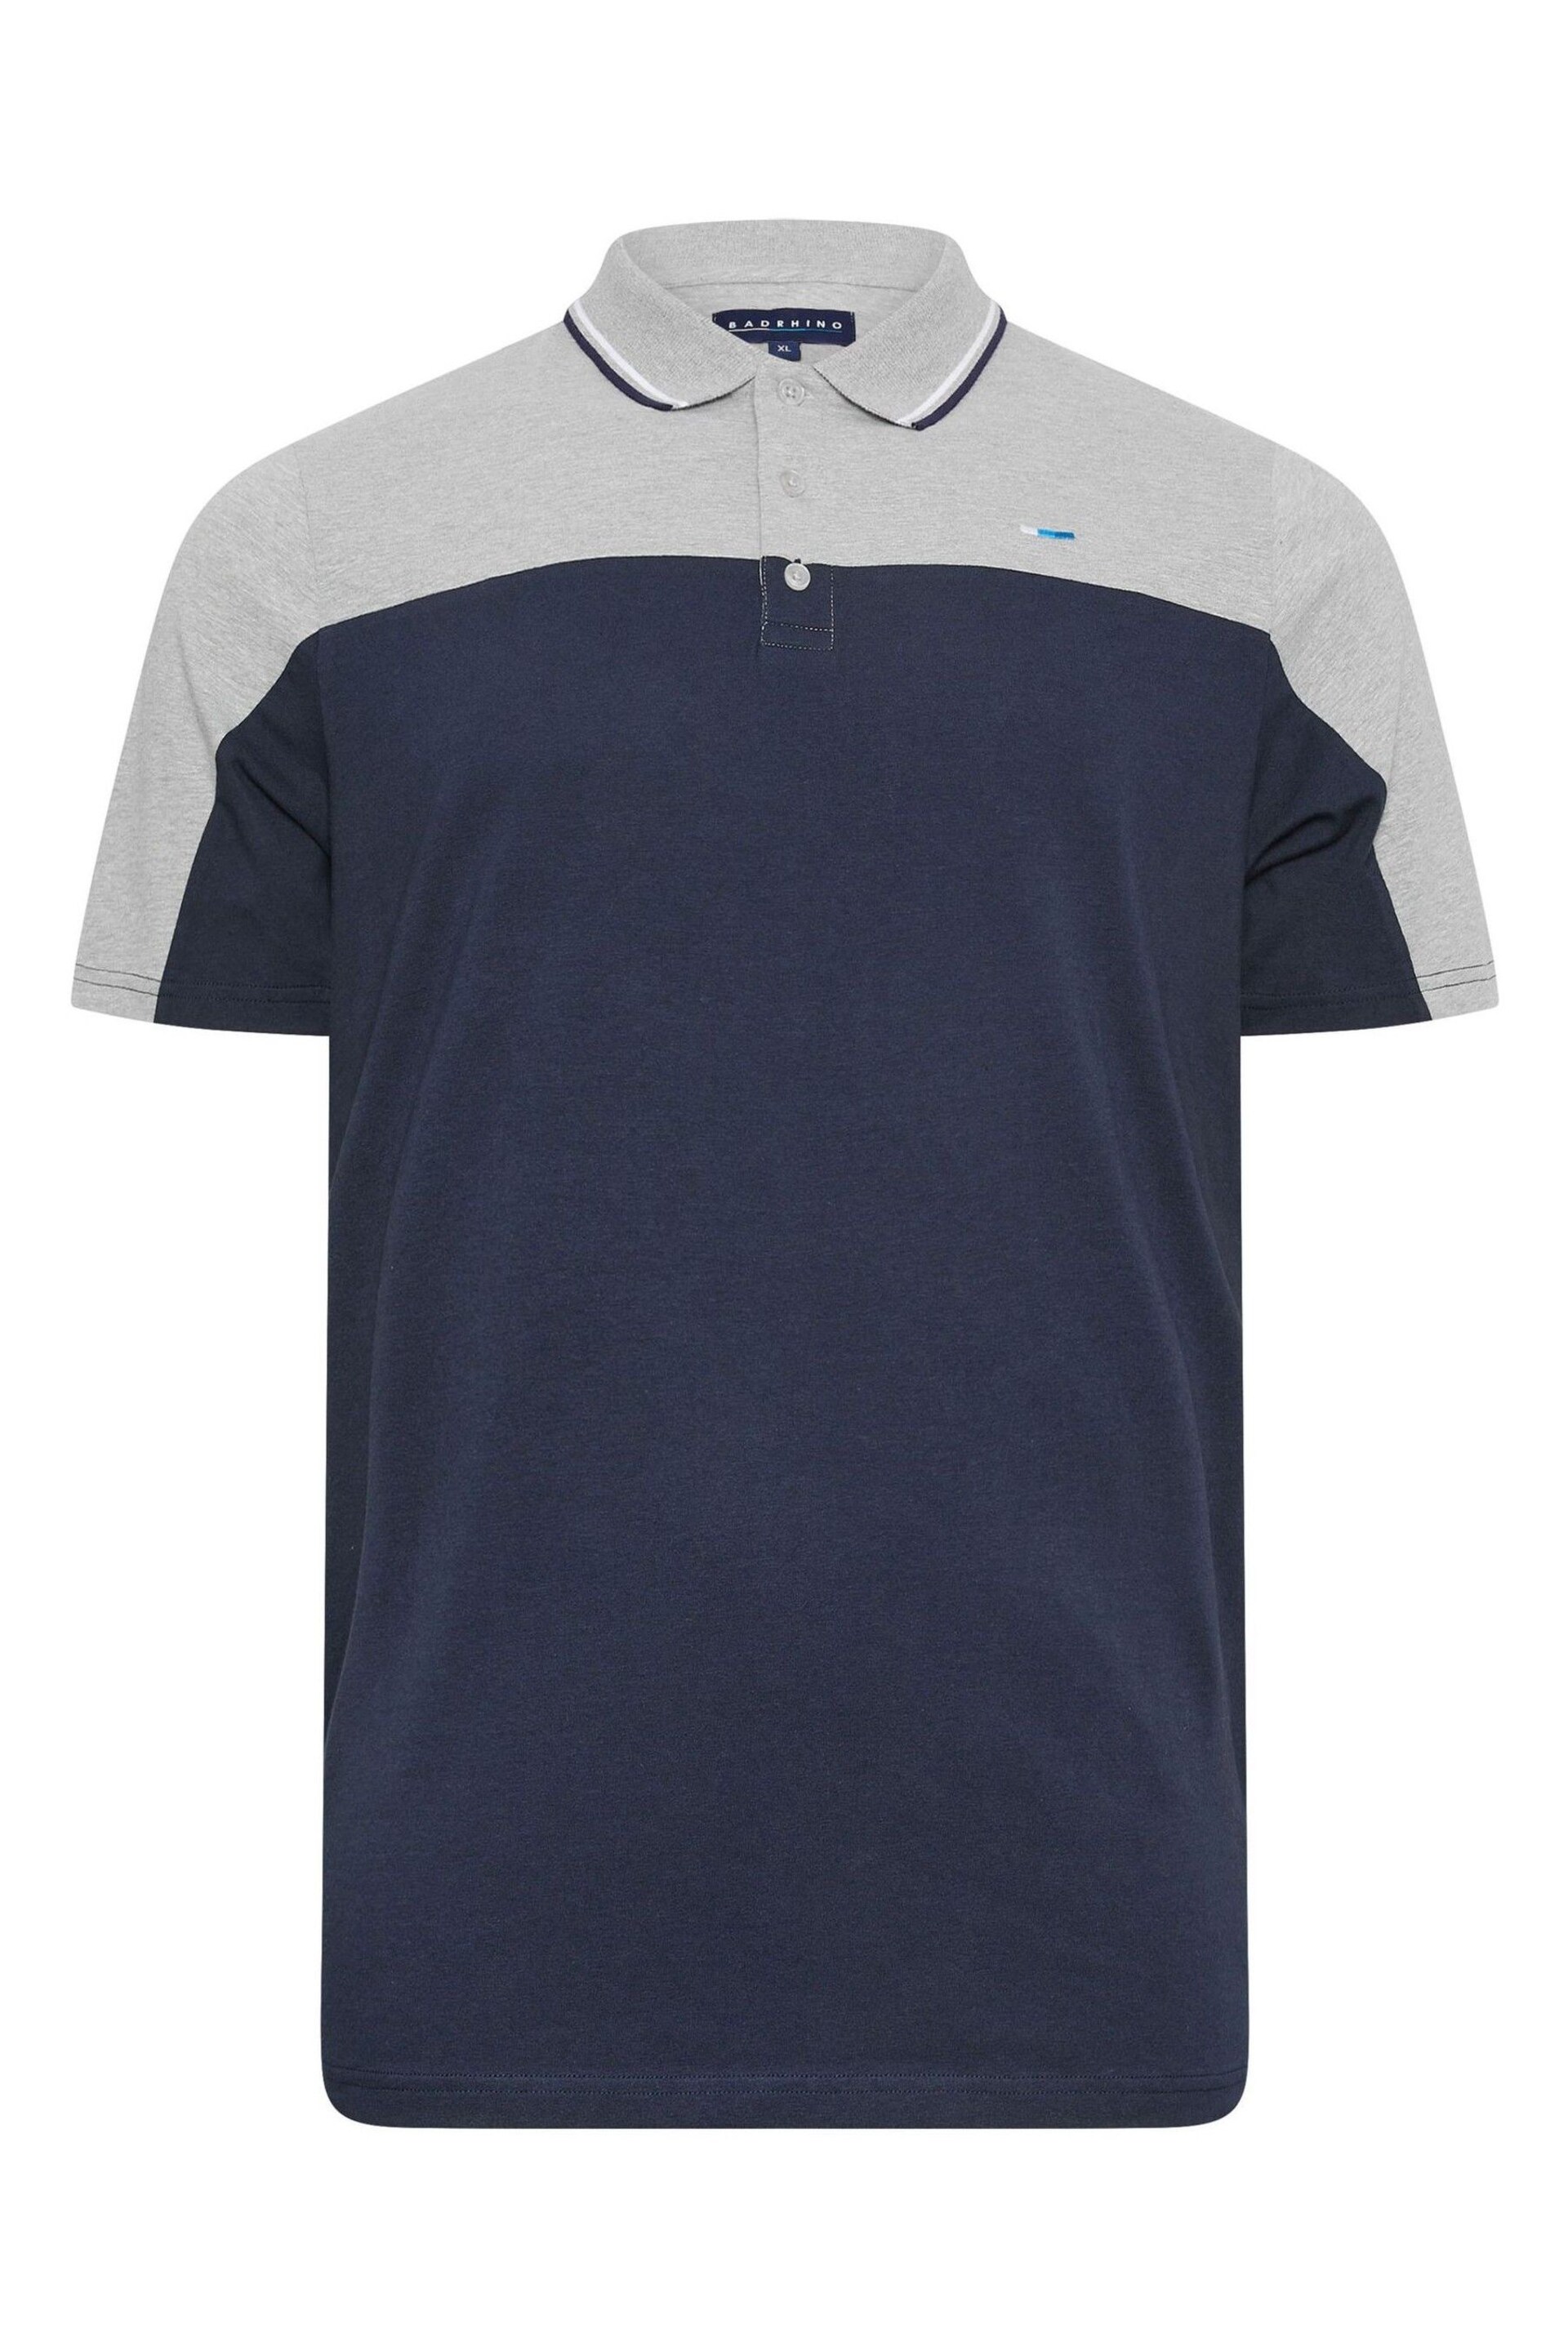 BadRhino Big & Tall Blue Cut & Sew Jersey Polo Shirt - Image 2 of 3